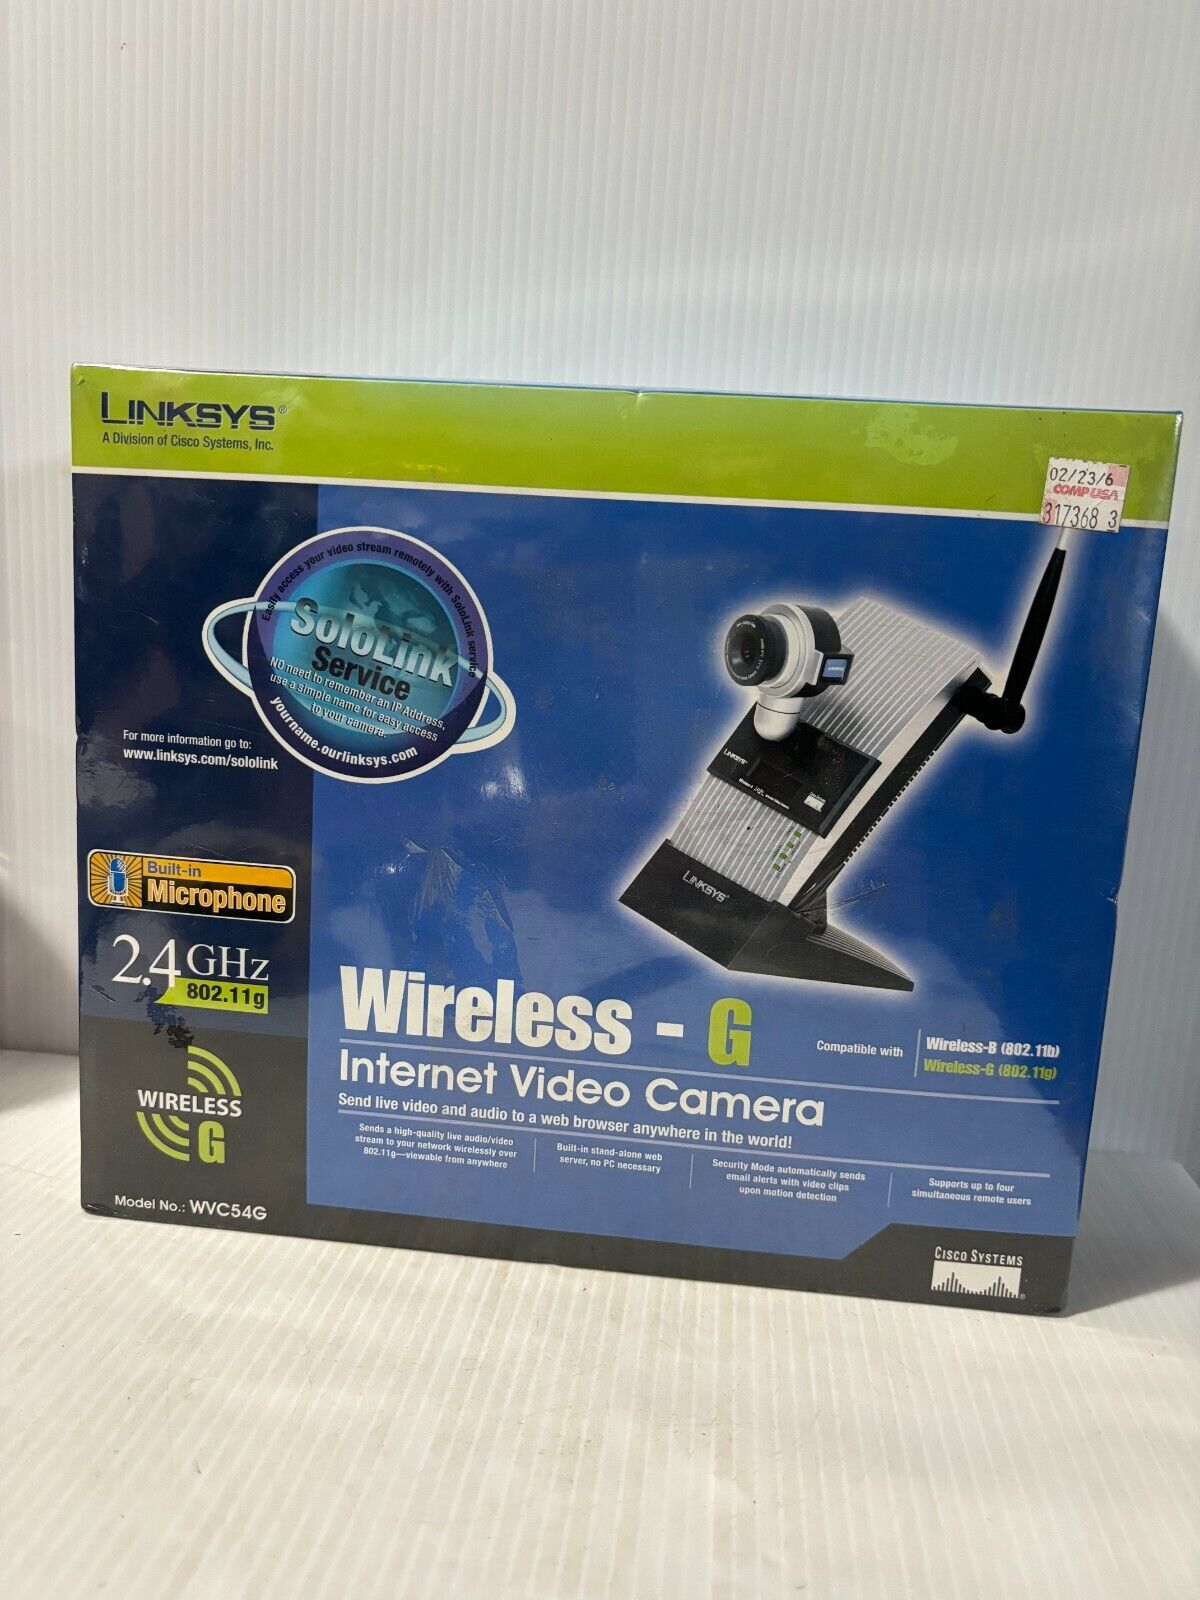 Linksys Wireless G Internet Video Camera WVC54G w/Built In Microphone